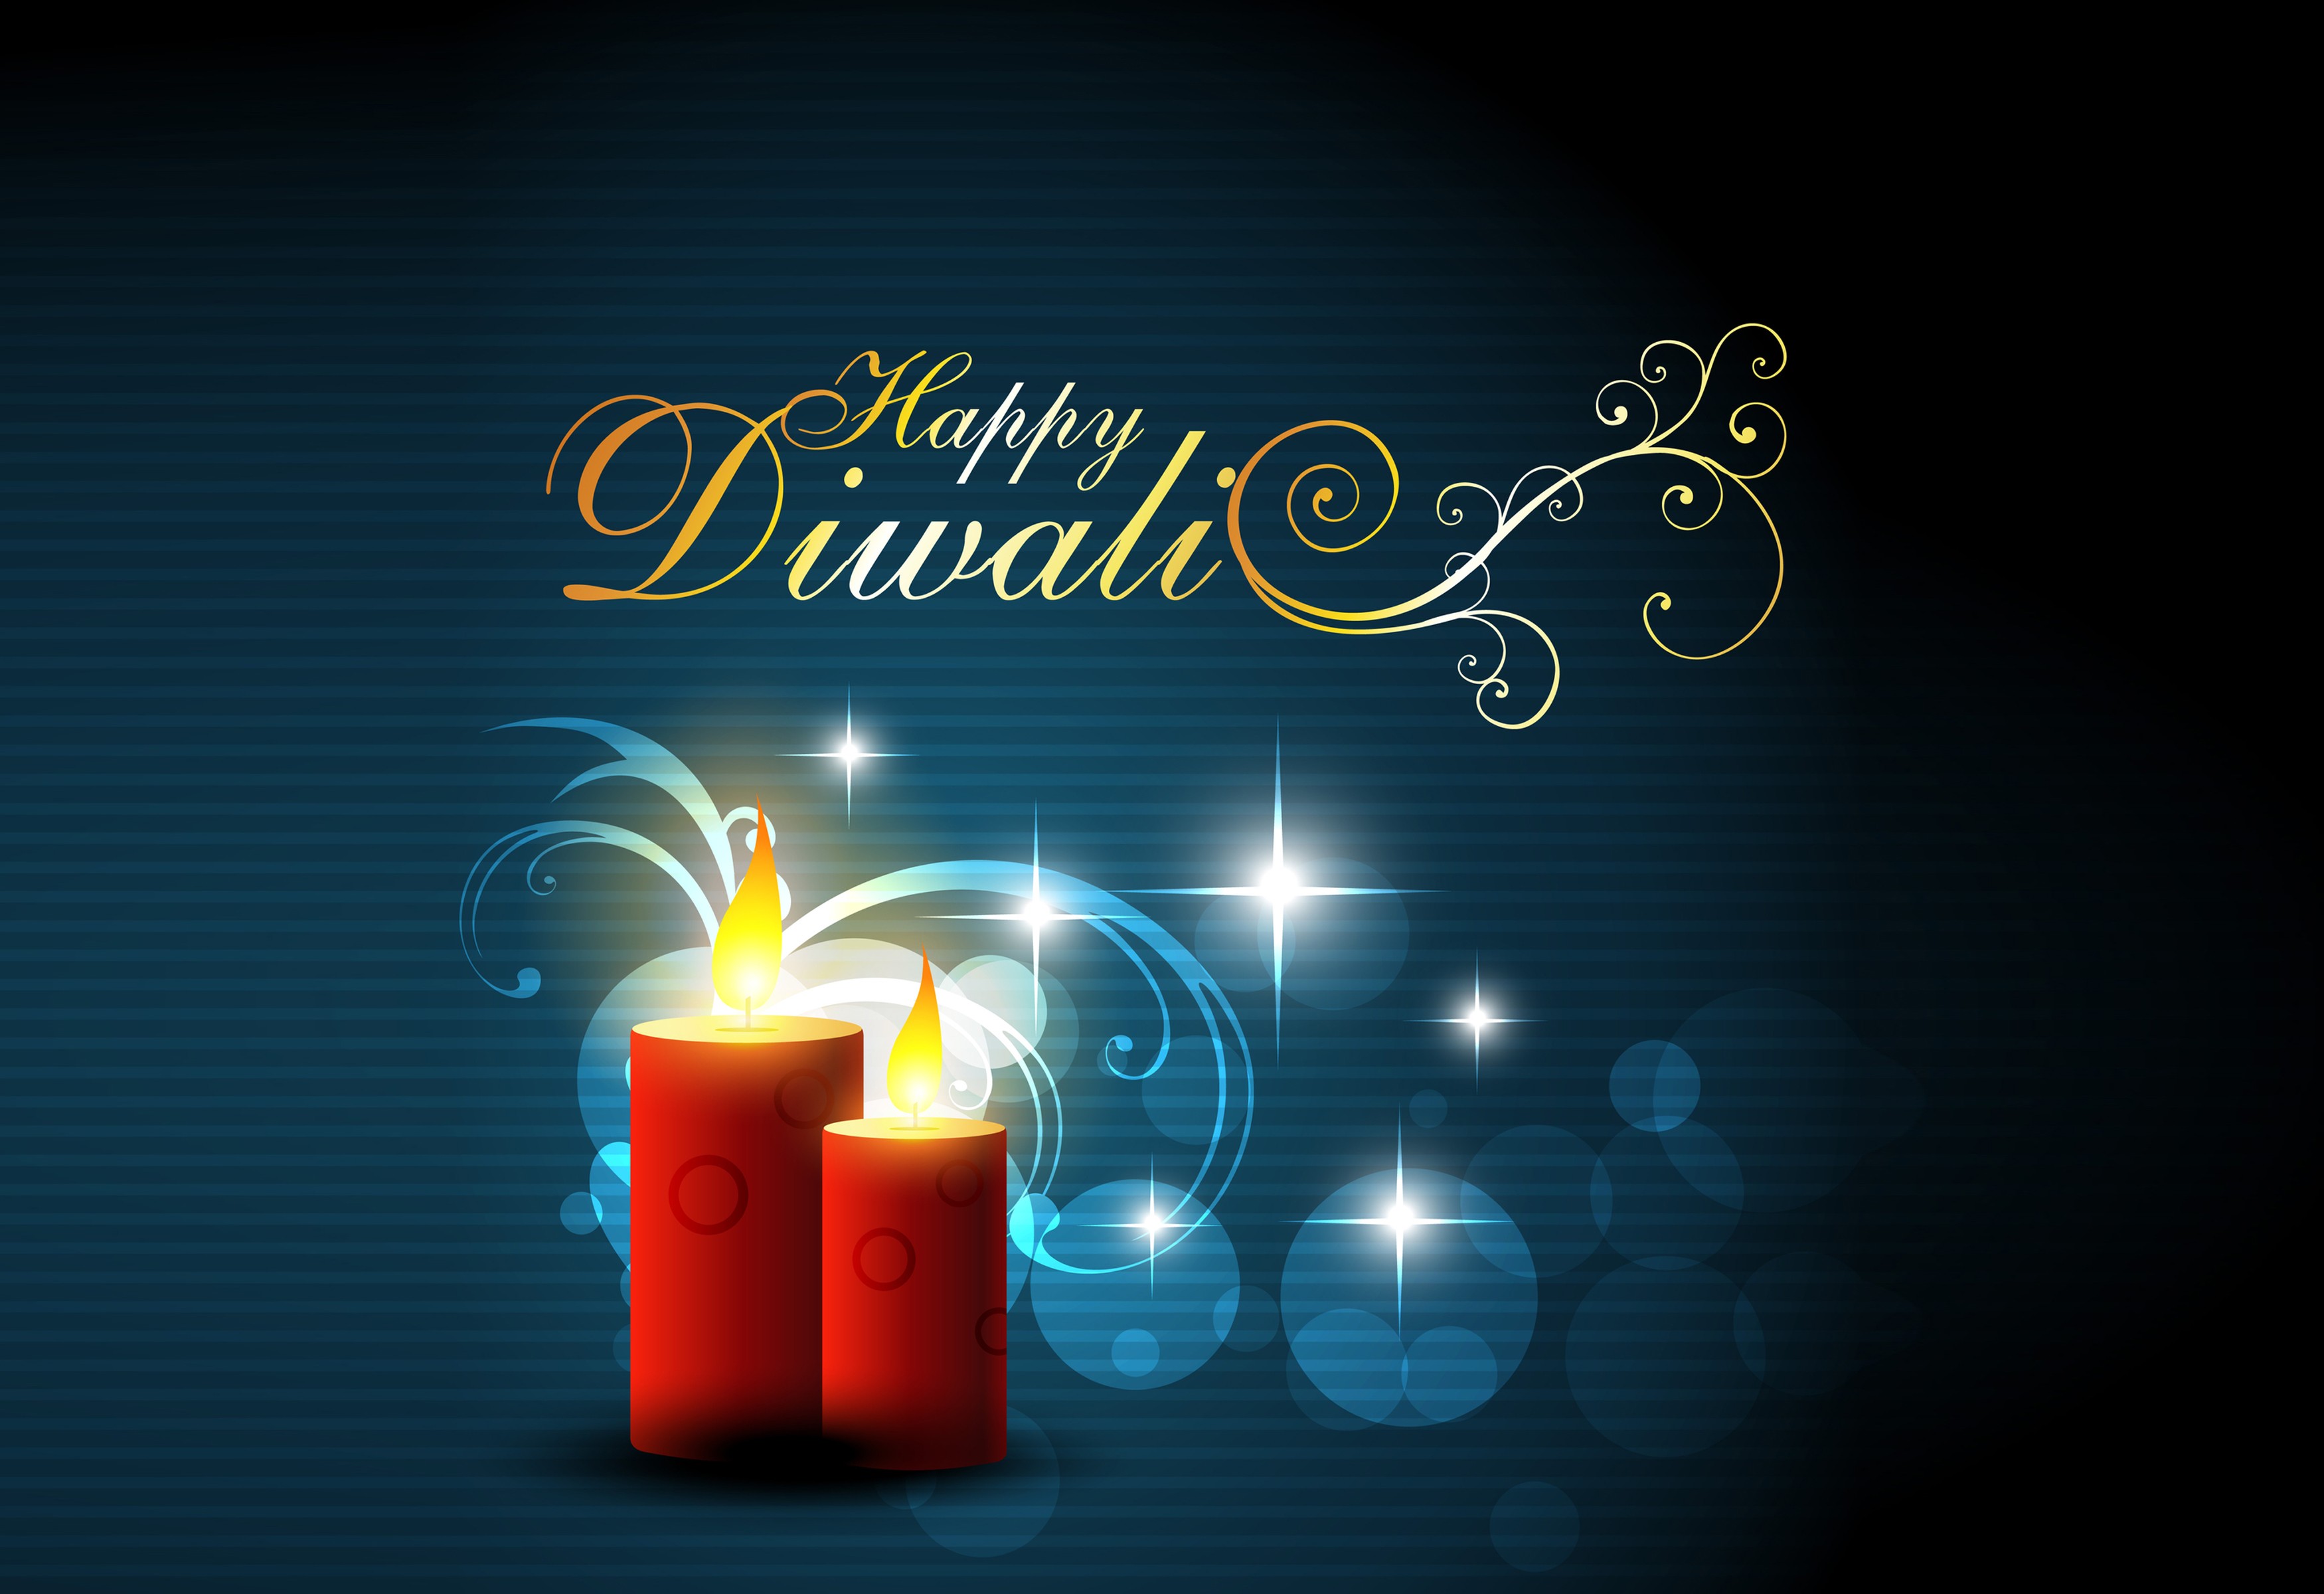 Latest Happy Diwali 2015 Wishes Messages Images Pictu - vrogue.co